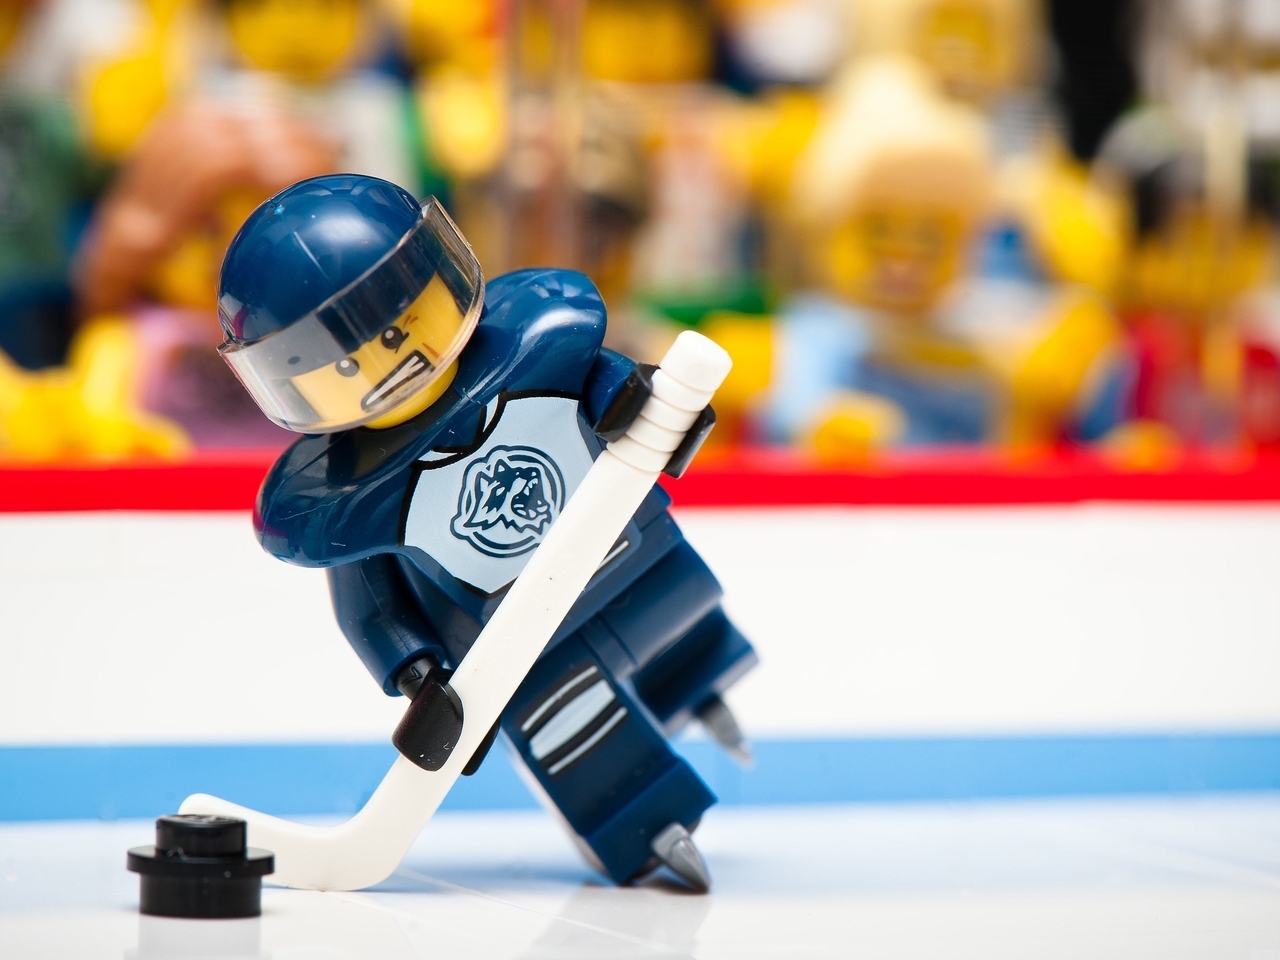 Image: Lego, toy, designer, man, hockey, ice, game, stick, puck